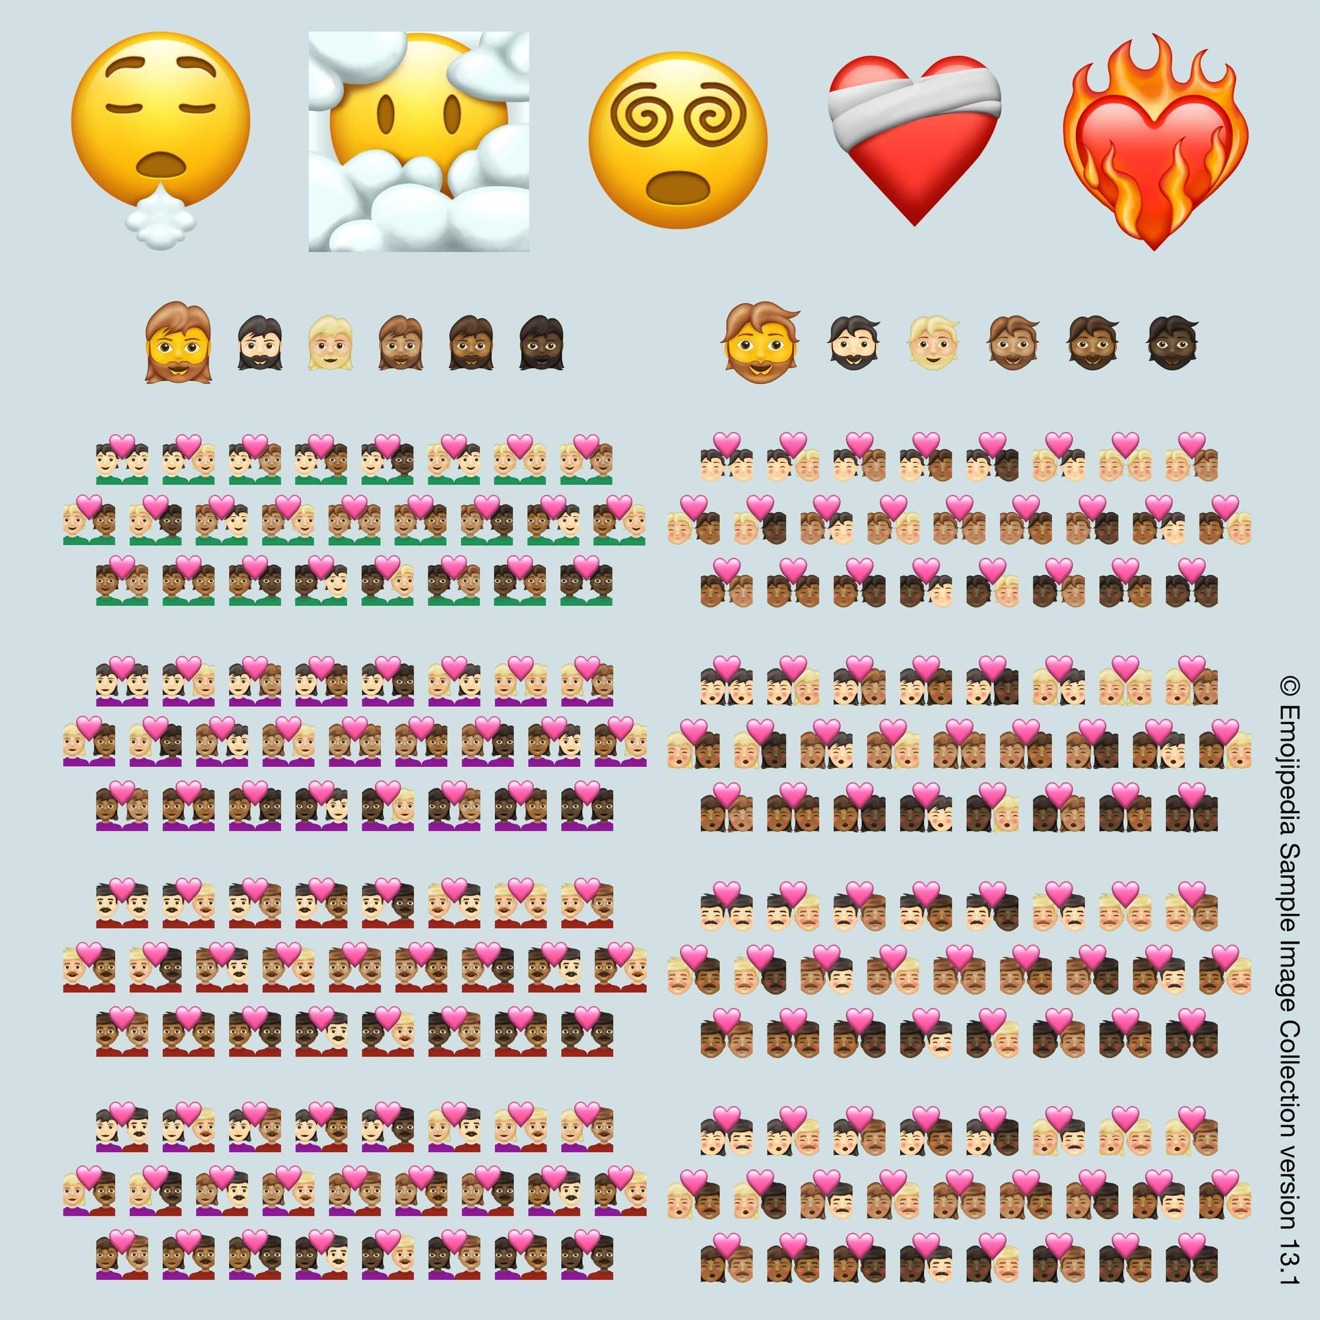 All 217 emoji combinations in Emoji 13.1 [via Emojipedia]